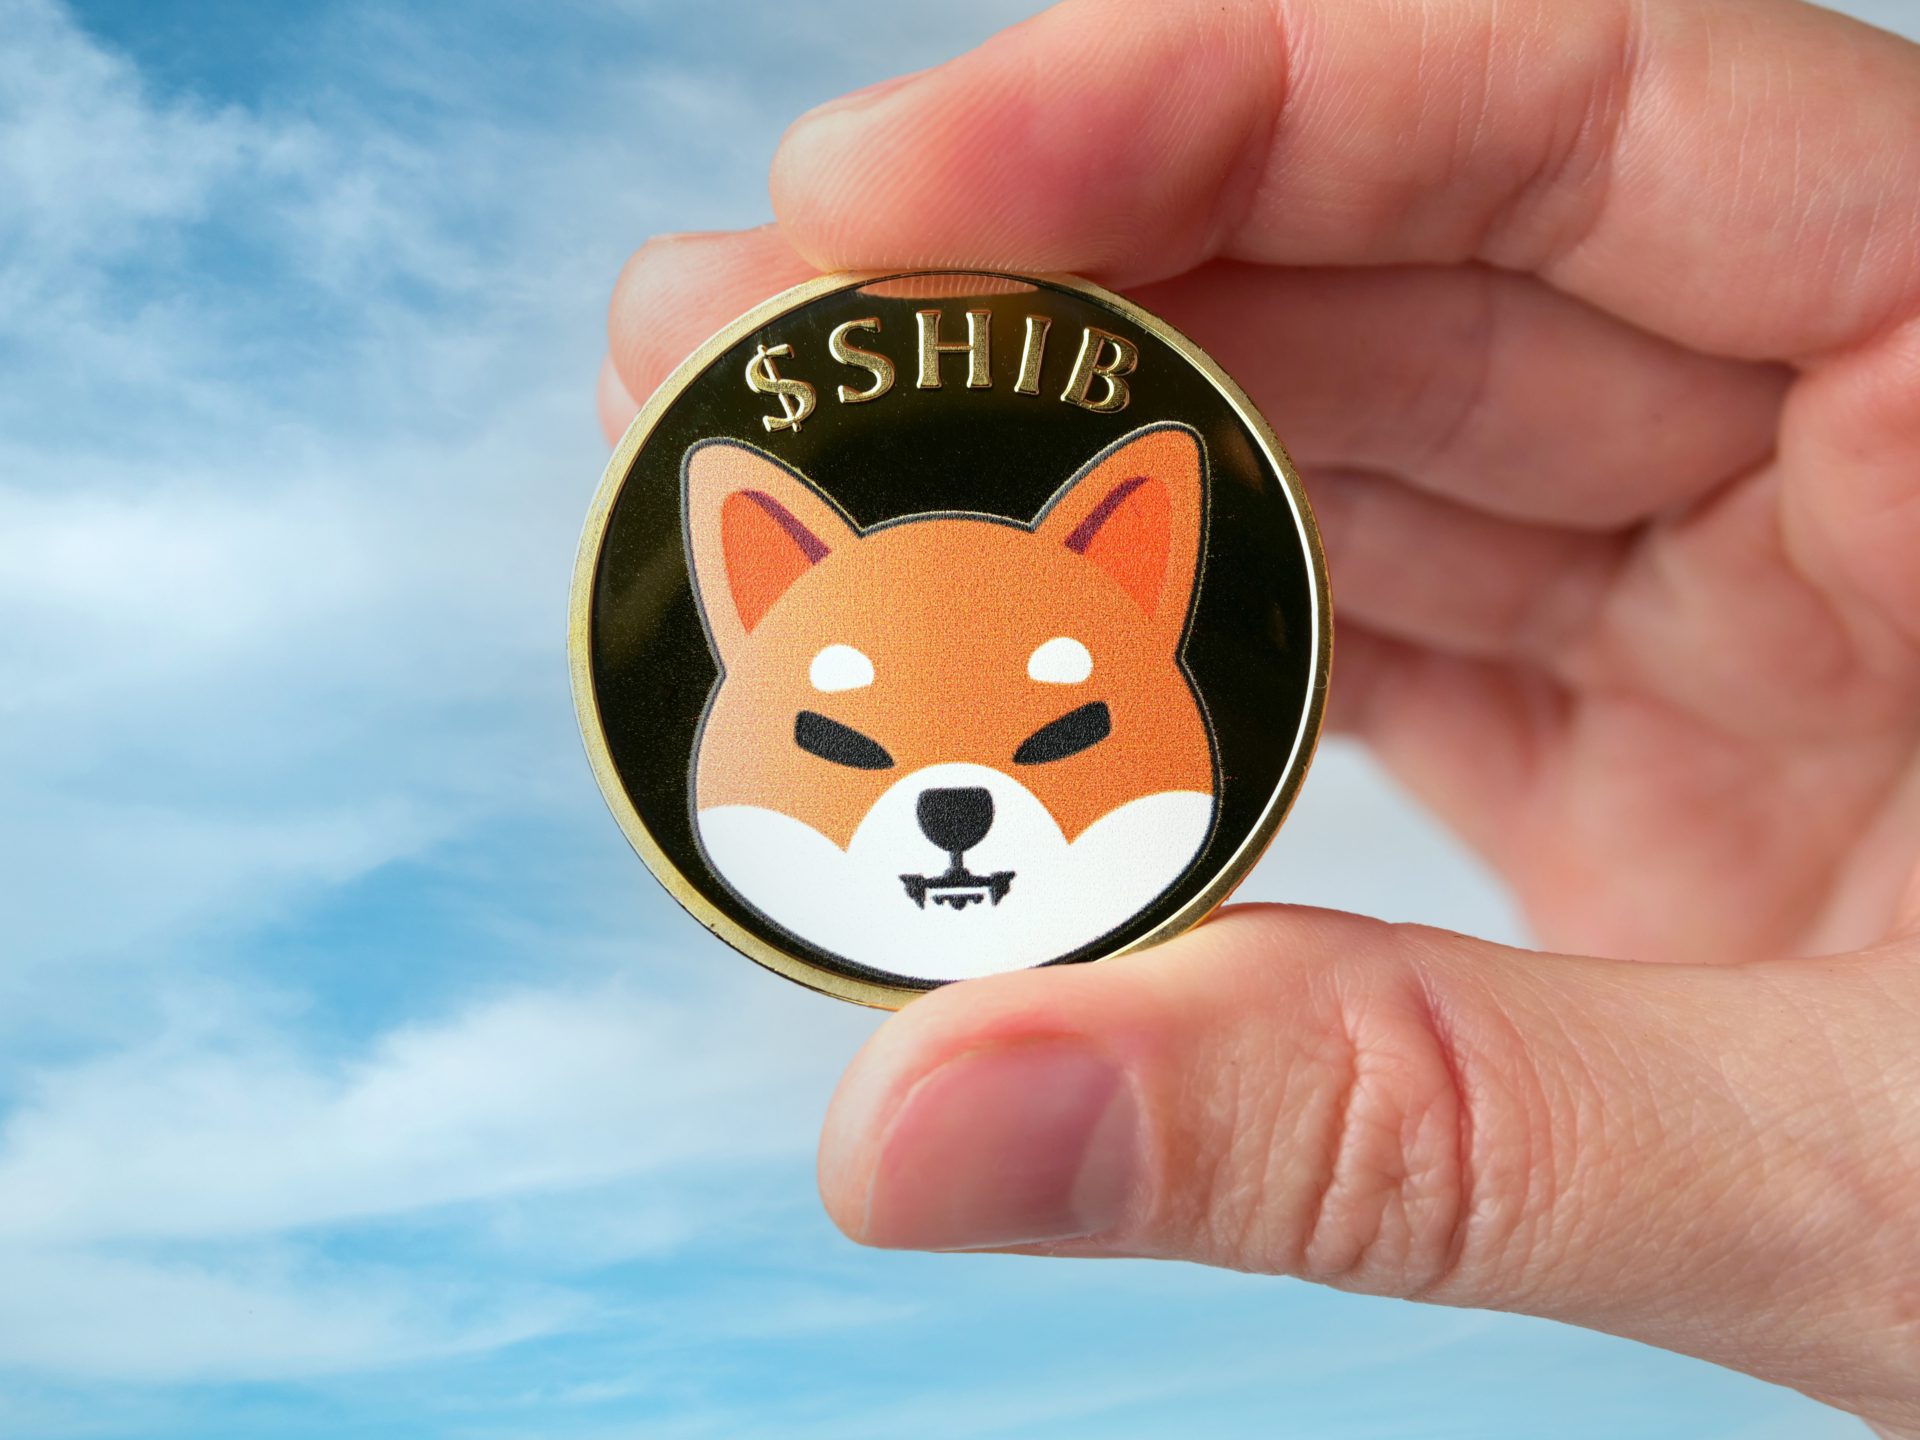 Shiba inu coin, shib